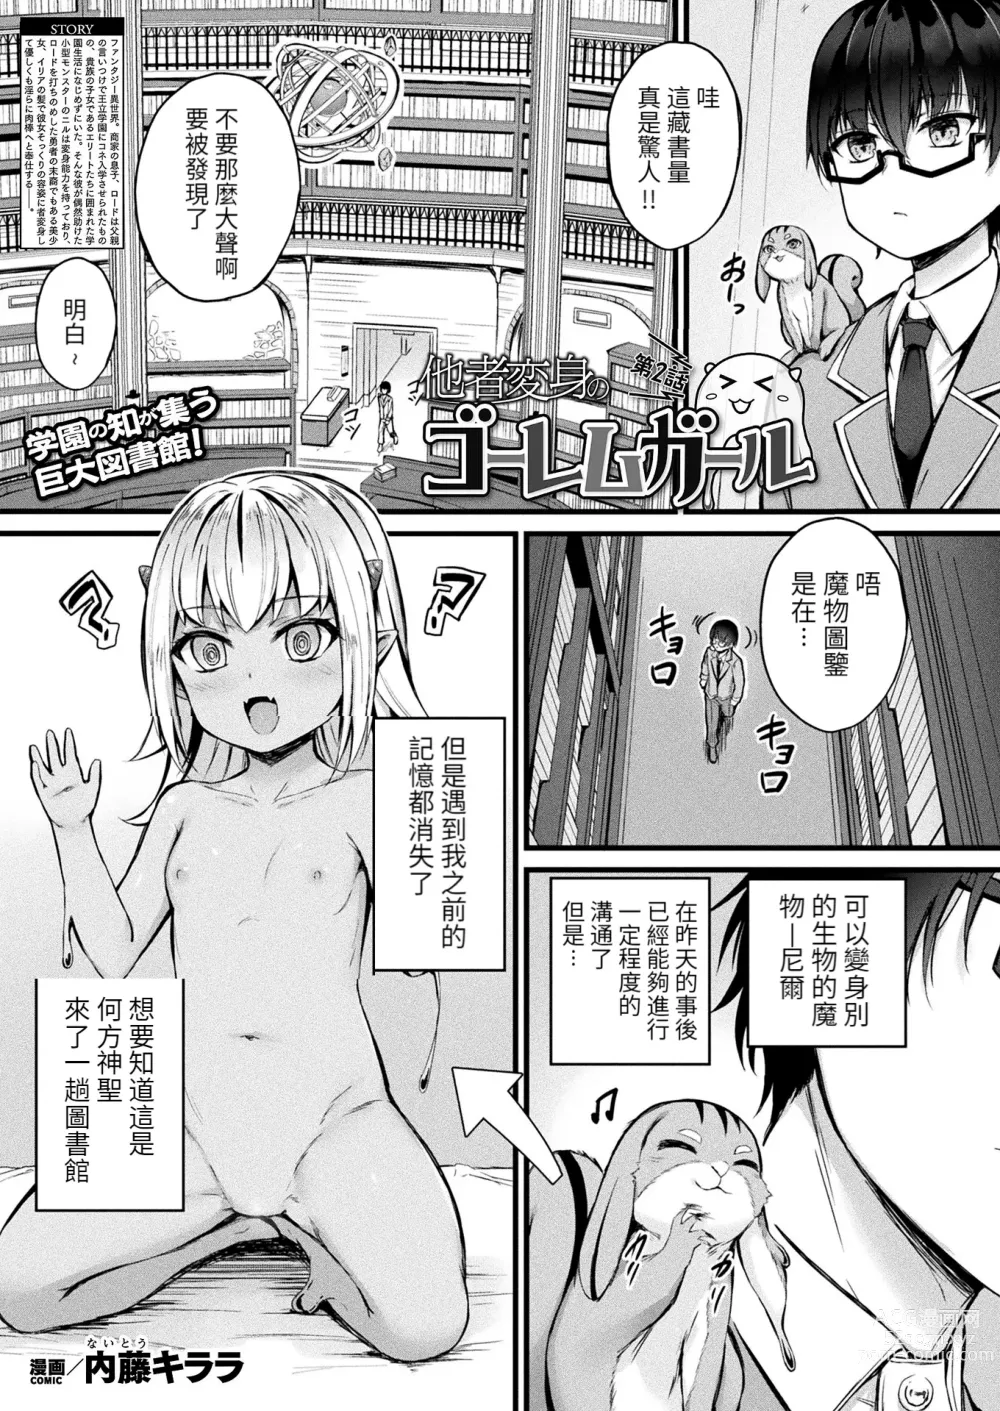 Page 2 of manga Tasha Henshin no Golem Girl Ch. 2